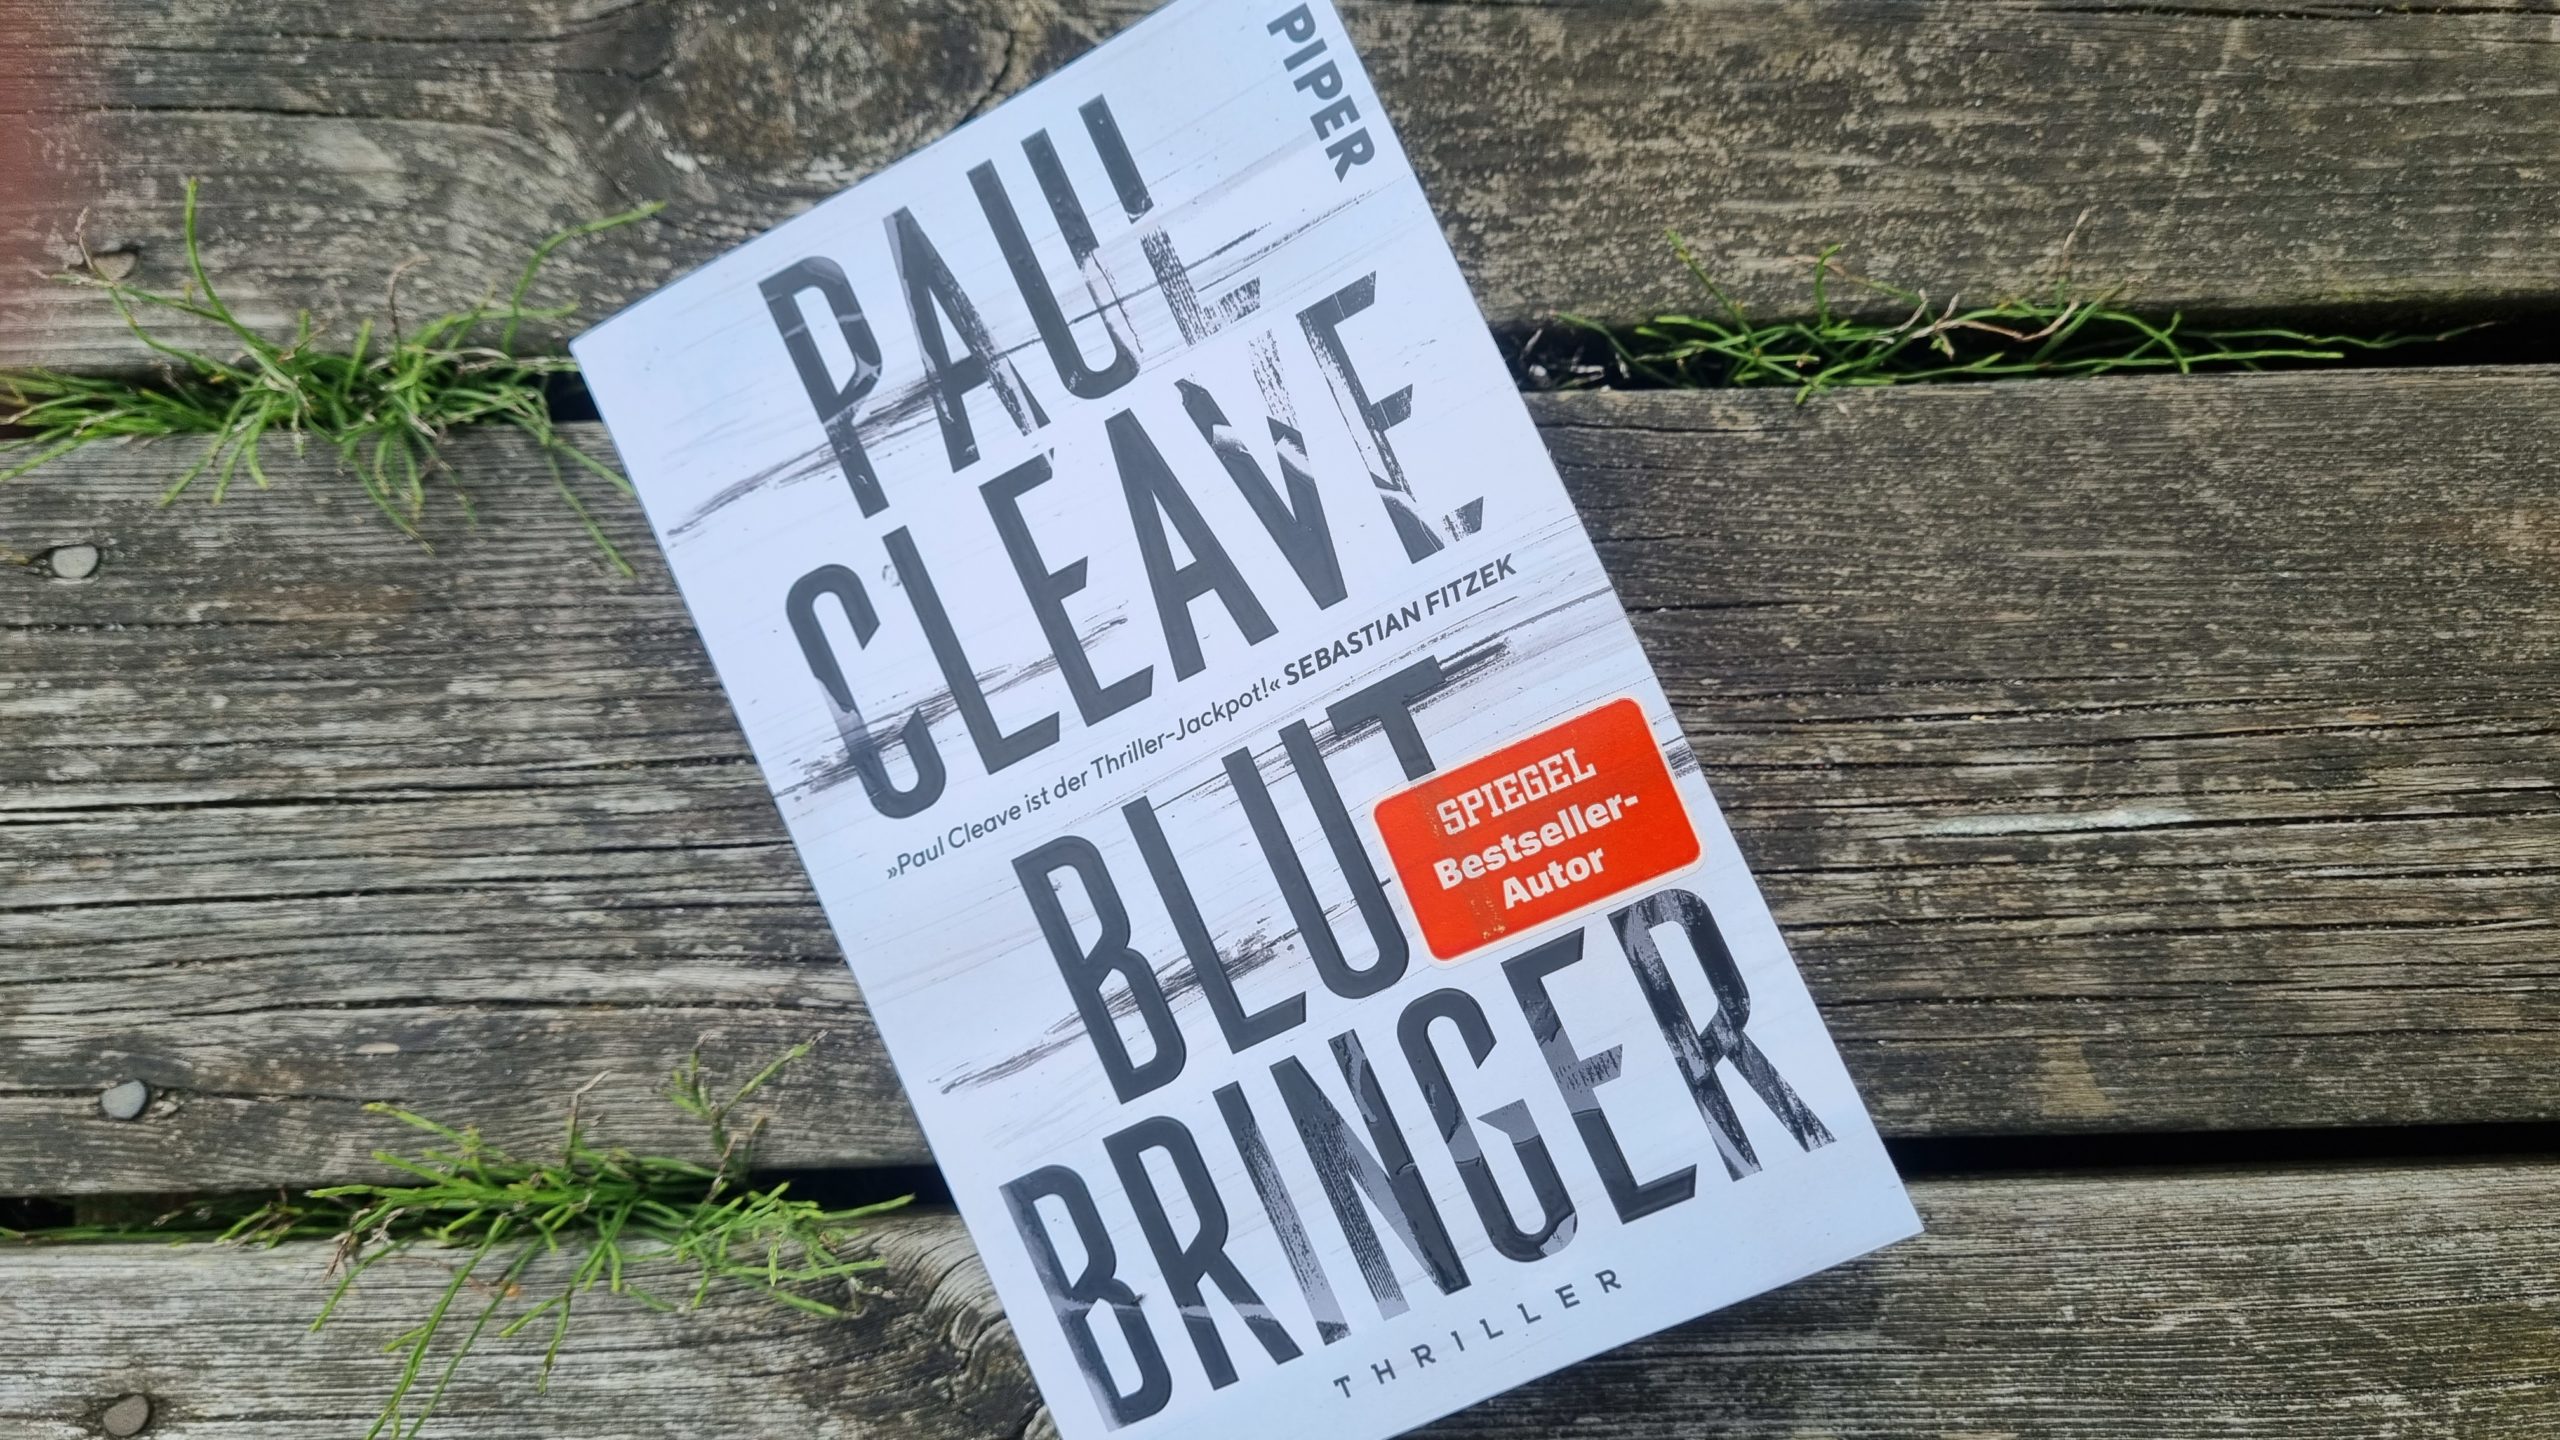 Buch-Cover: Blutbringer, Paul Cleave, Piper-Verlag